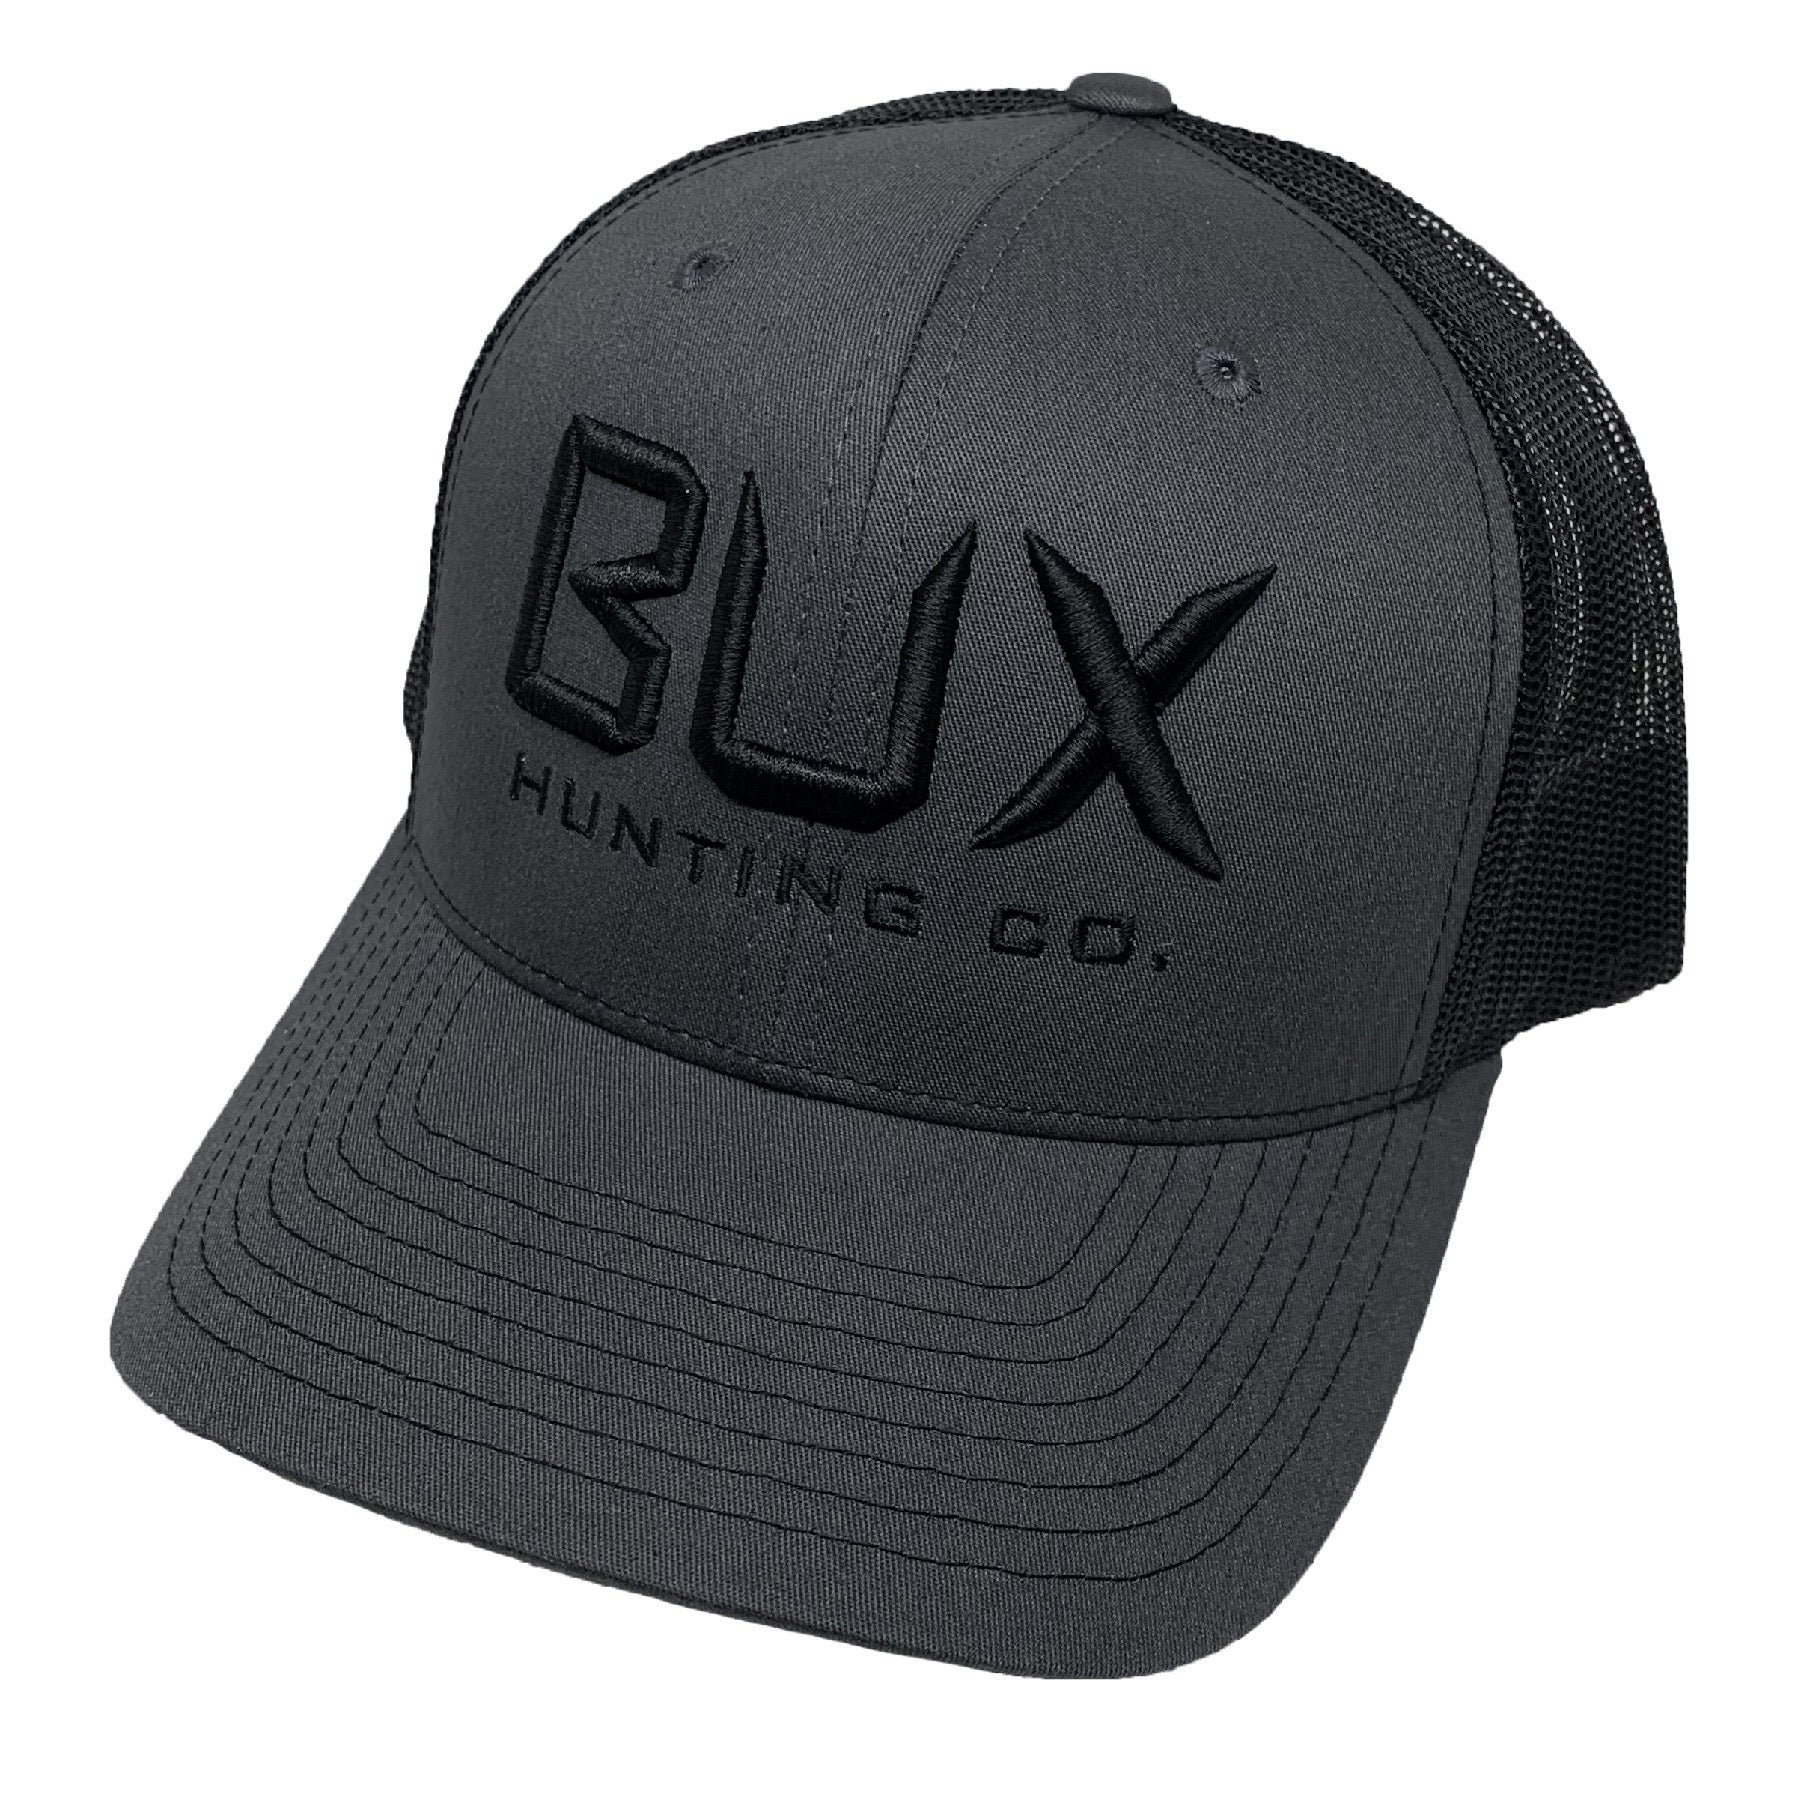 HEADWEAR – Bux Hunting